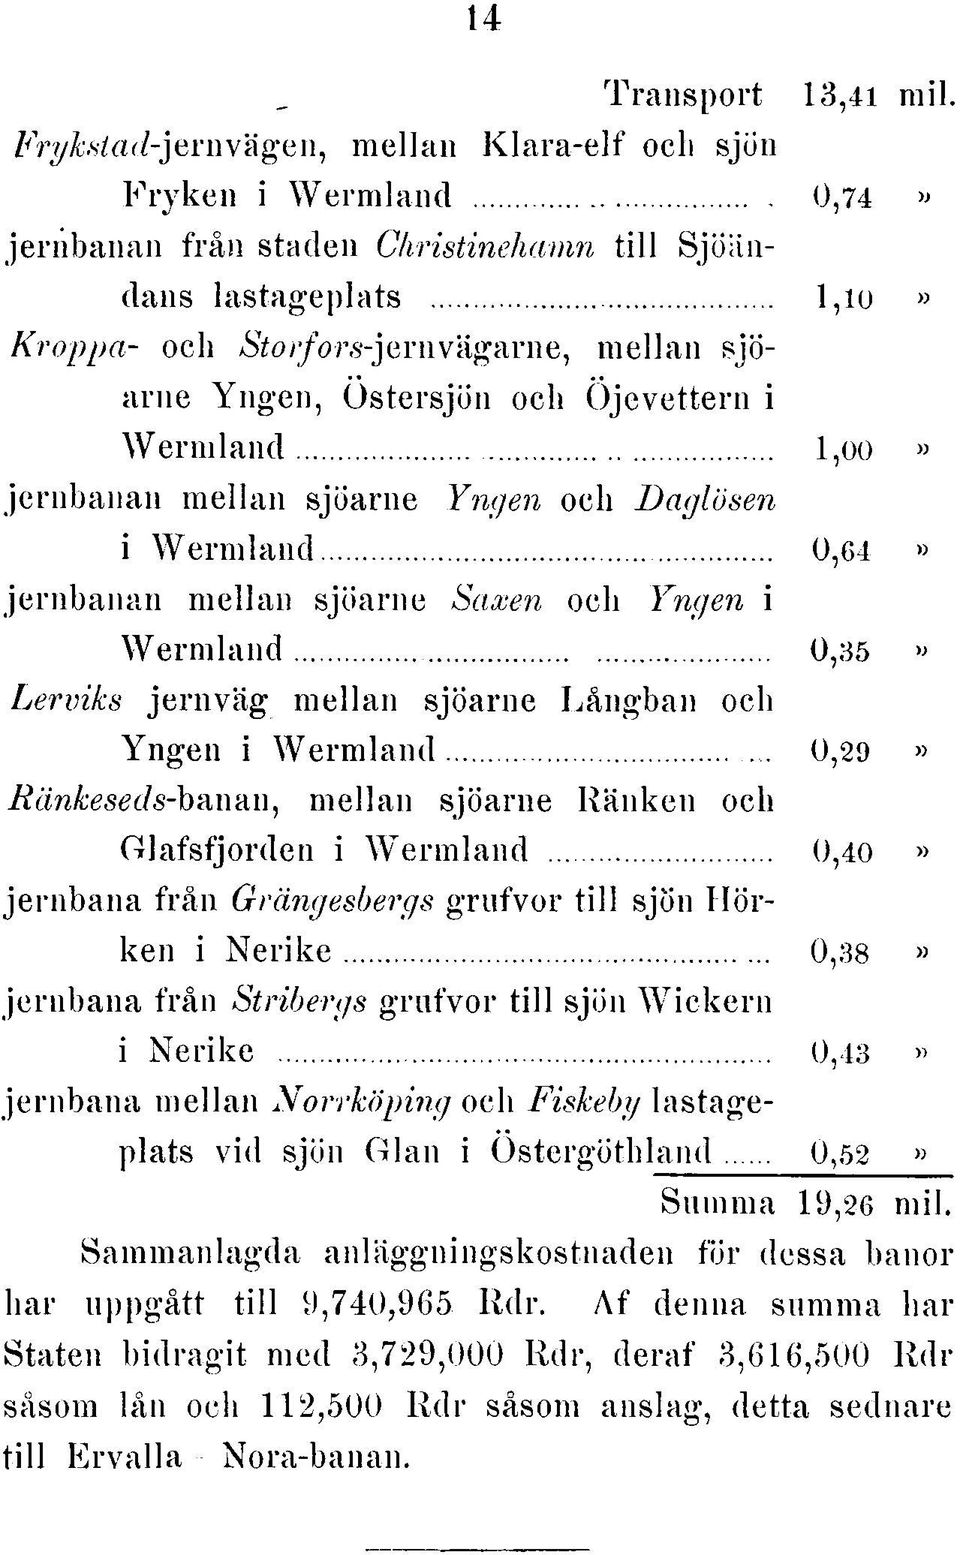 .. 0,64» jernbanan mellan sjöarne Saxen och Yngen i W erm land...... 0,35 «Lerviks jernväg mellan sjöarne Långban och Yngen i Wermland.